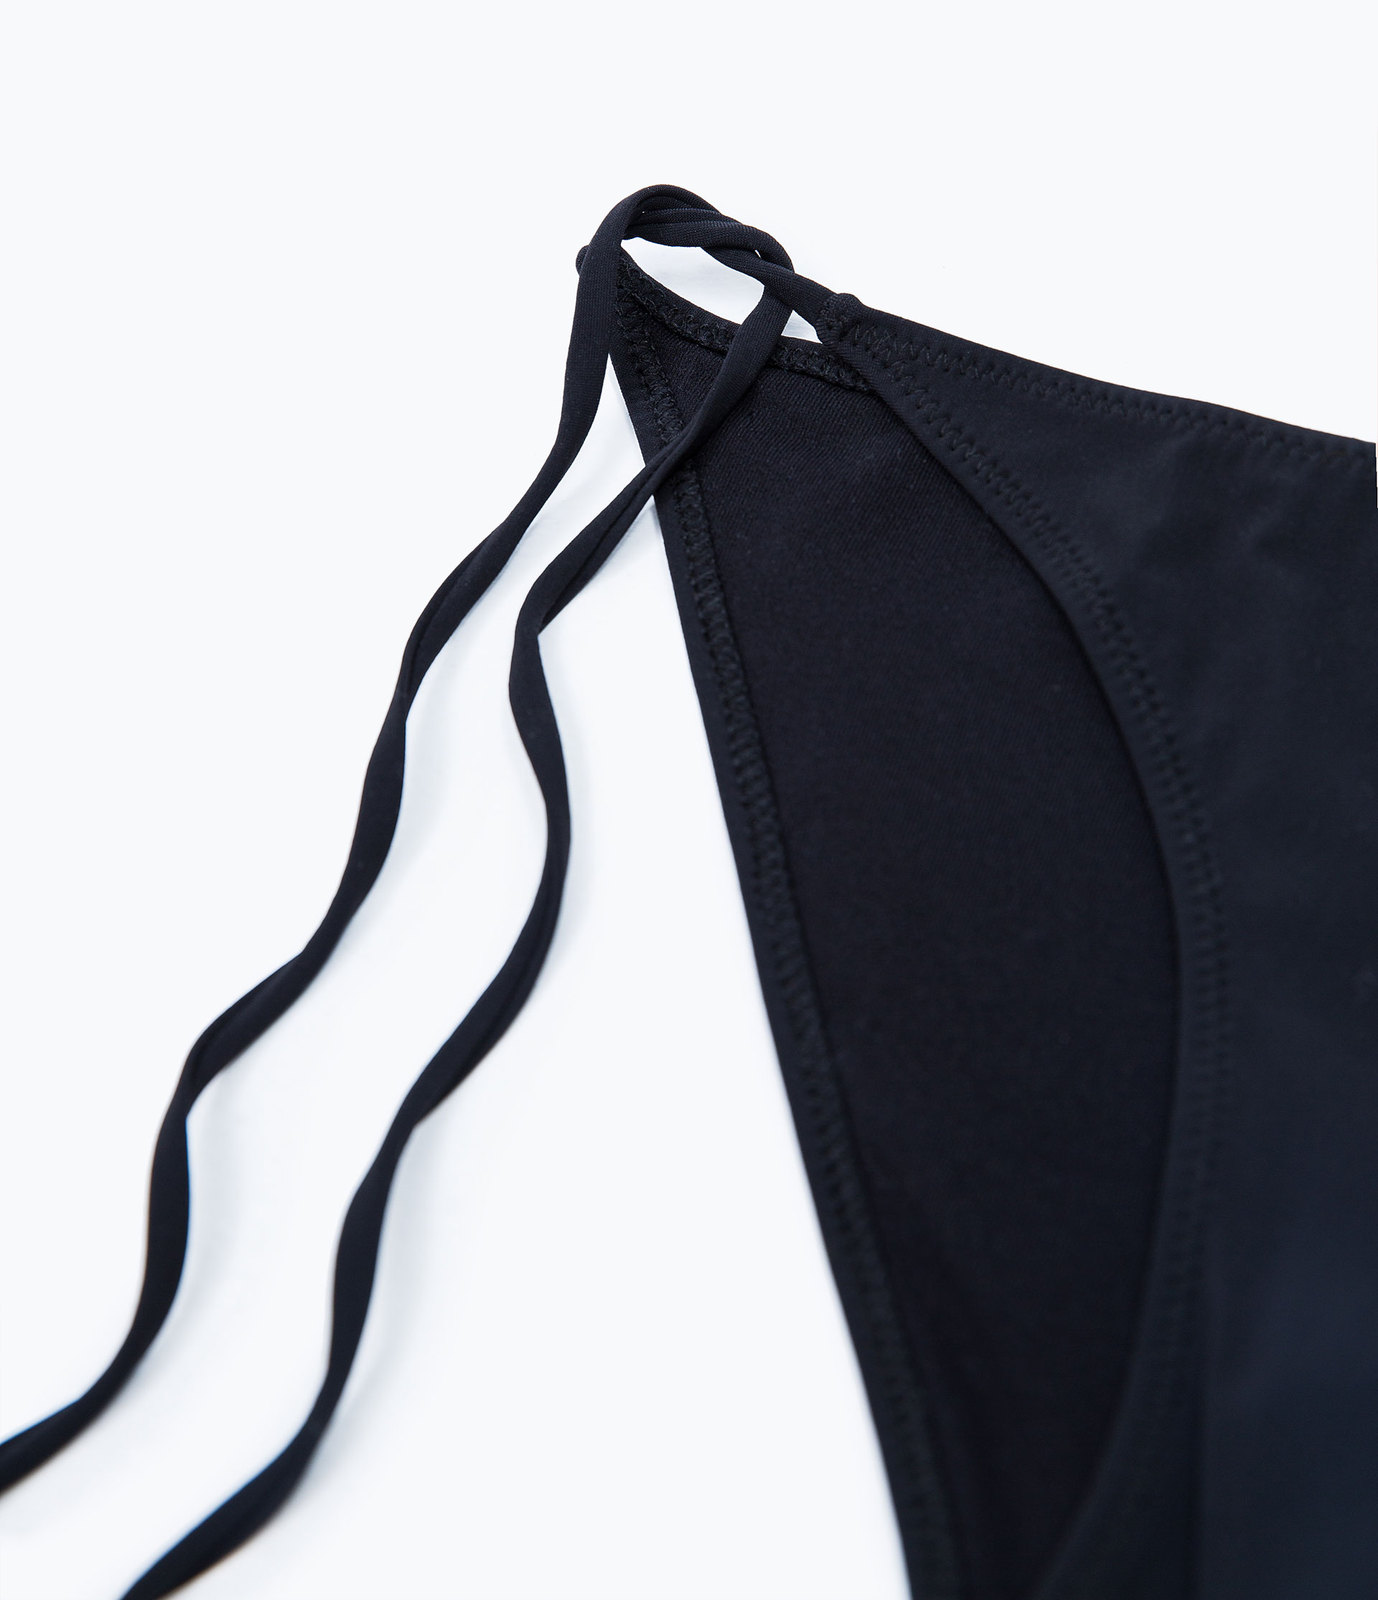 Zara fekete oldaltkötős bikini alsó 2015.02.23 fotója